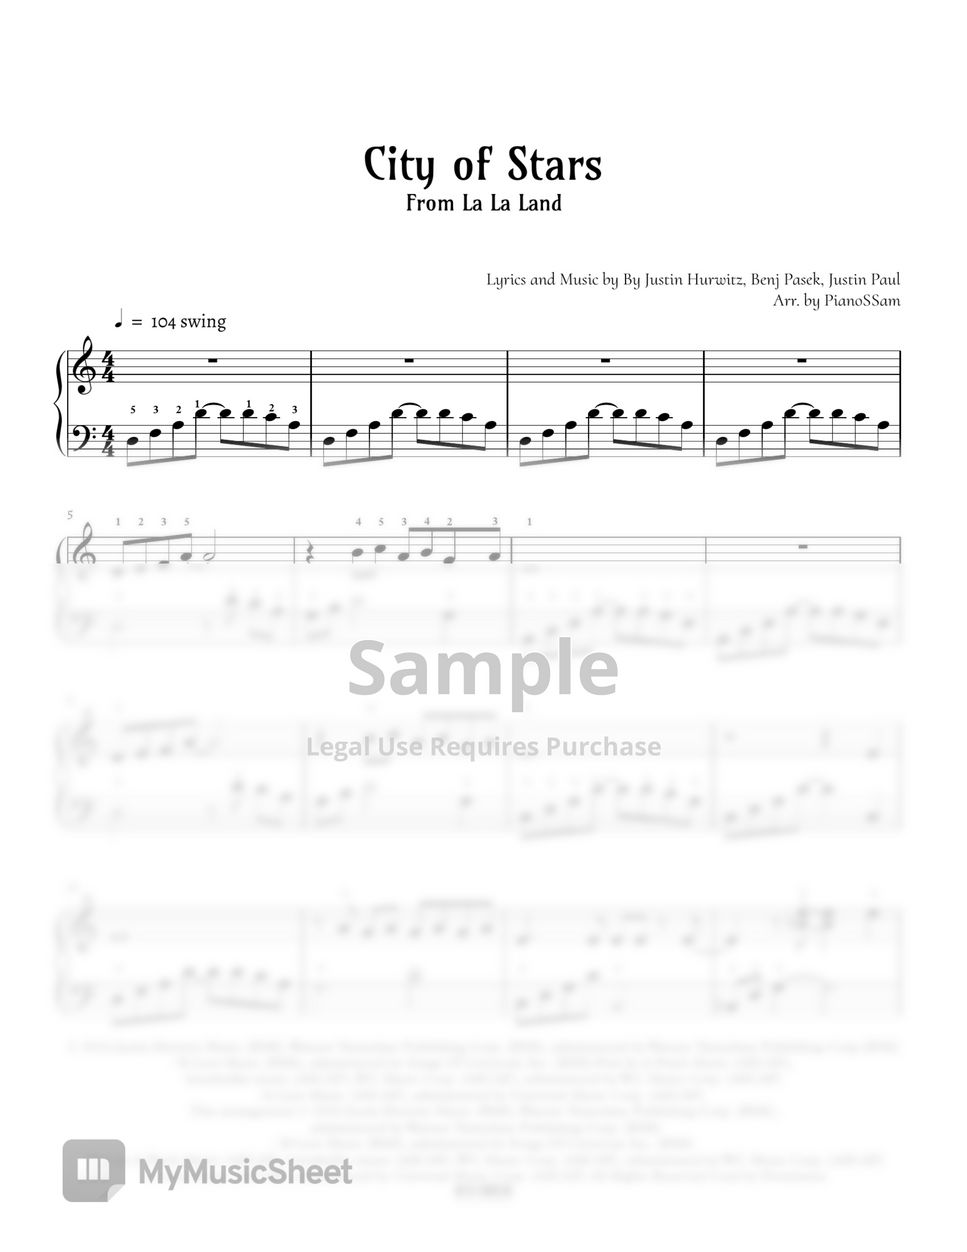 La La Land - City of Stars (Intermediate Level) (Hurwitz) - Piano Sheet  Music